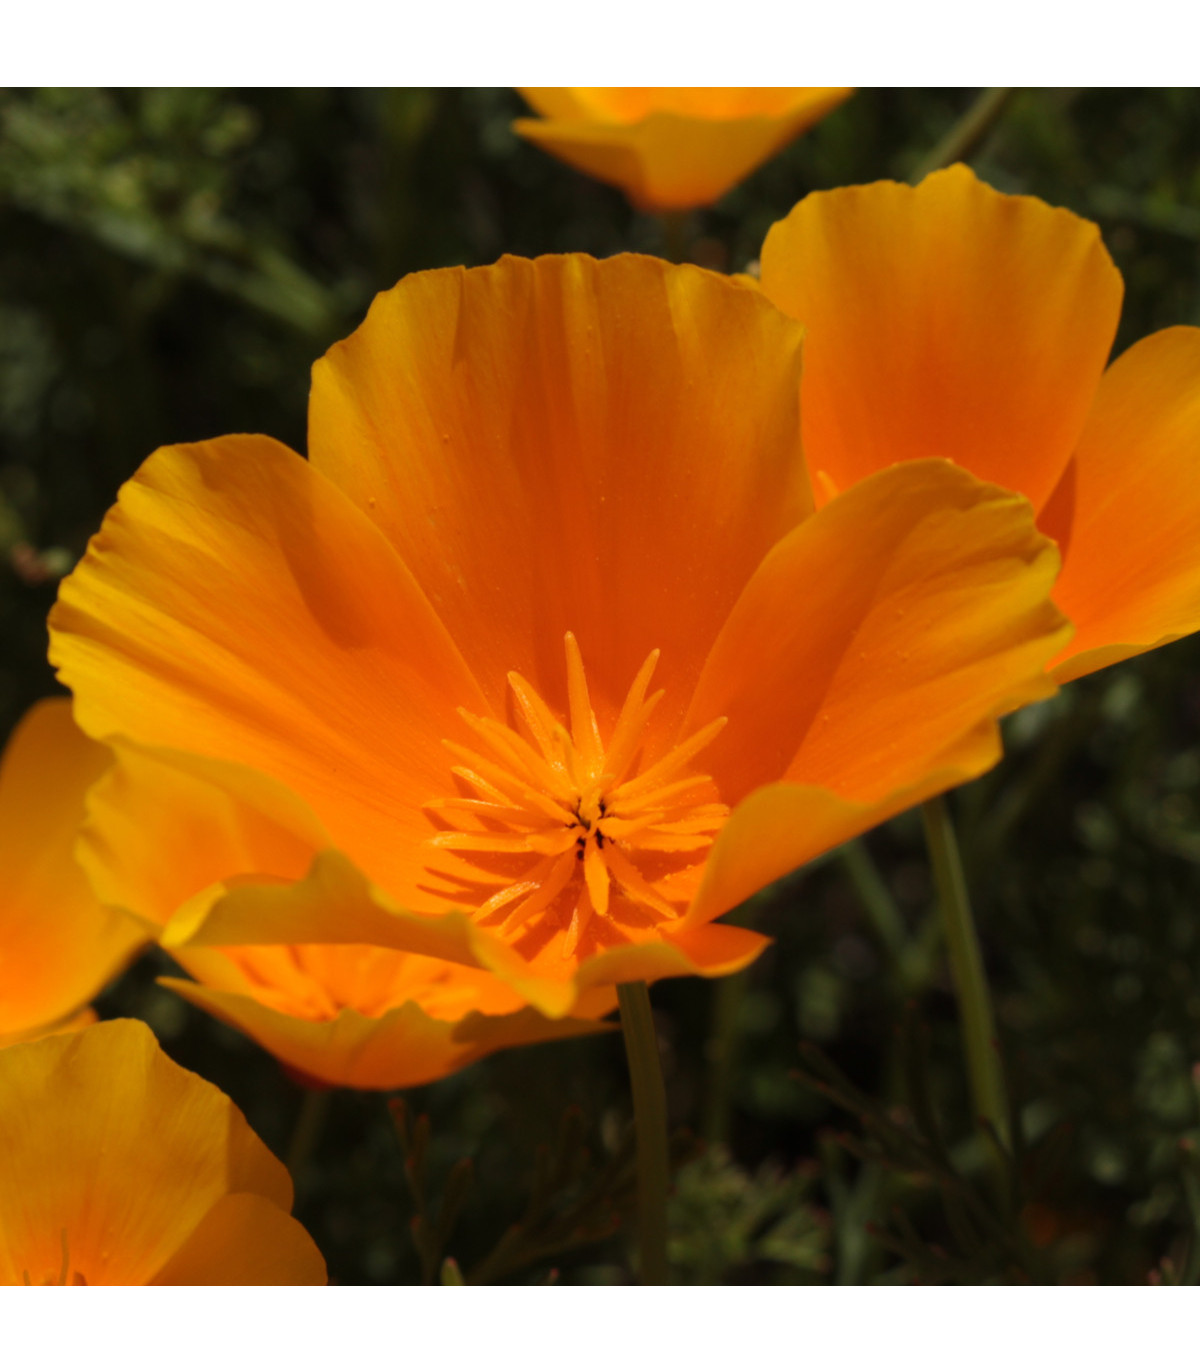 Sluncovka kalifornská oranžová - Eschscholzia californica - osivo sluncovky - 450 ks